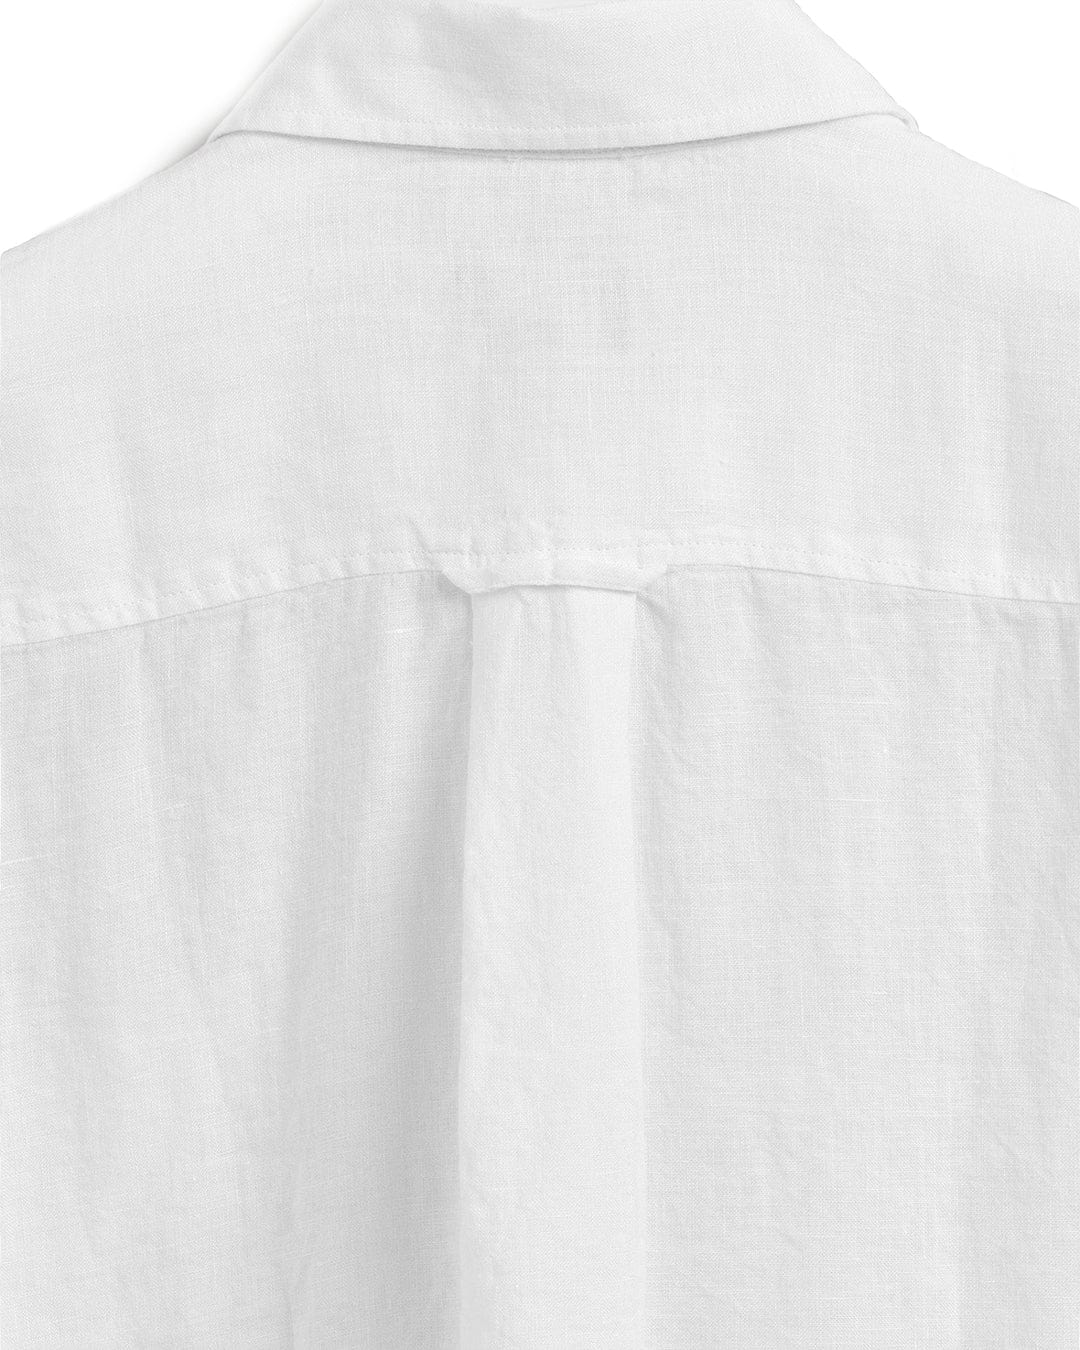 Gant Shirts Gant Lightweight Washed Linen Chambray White Shirt